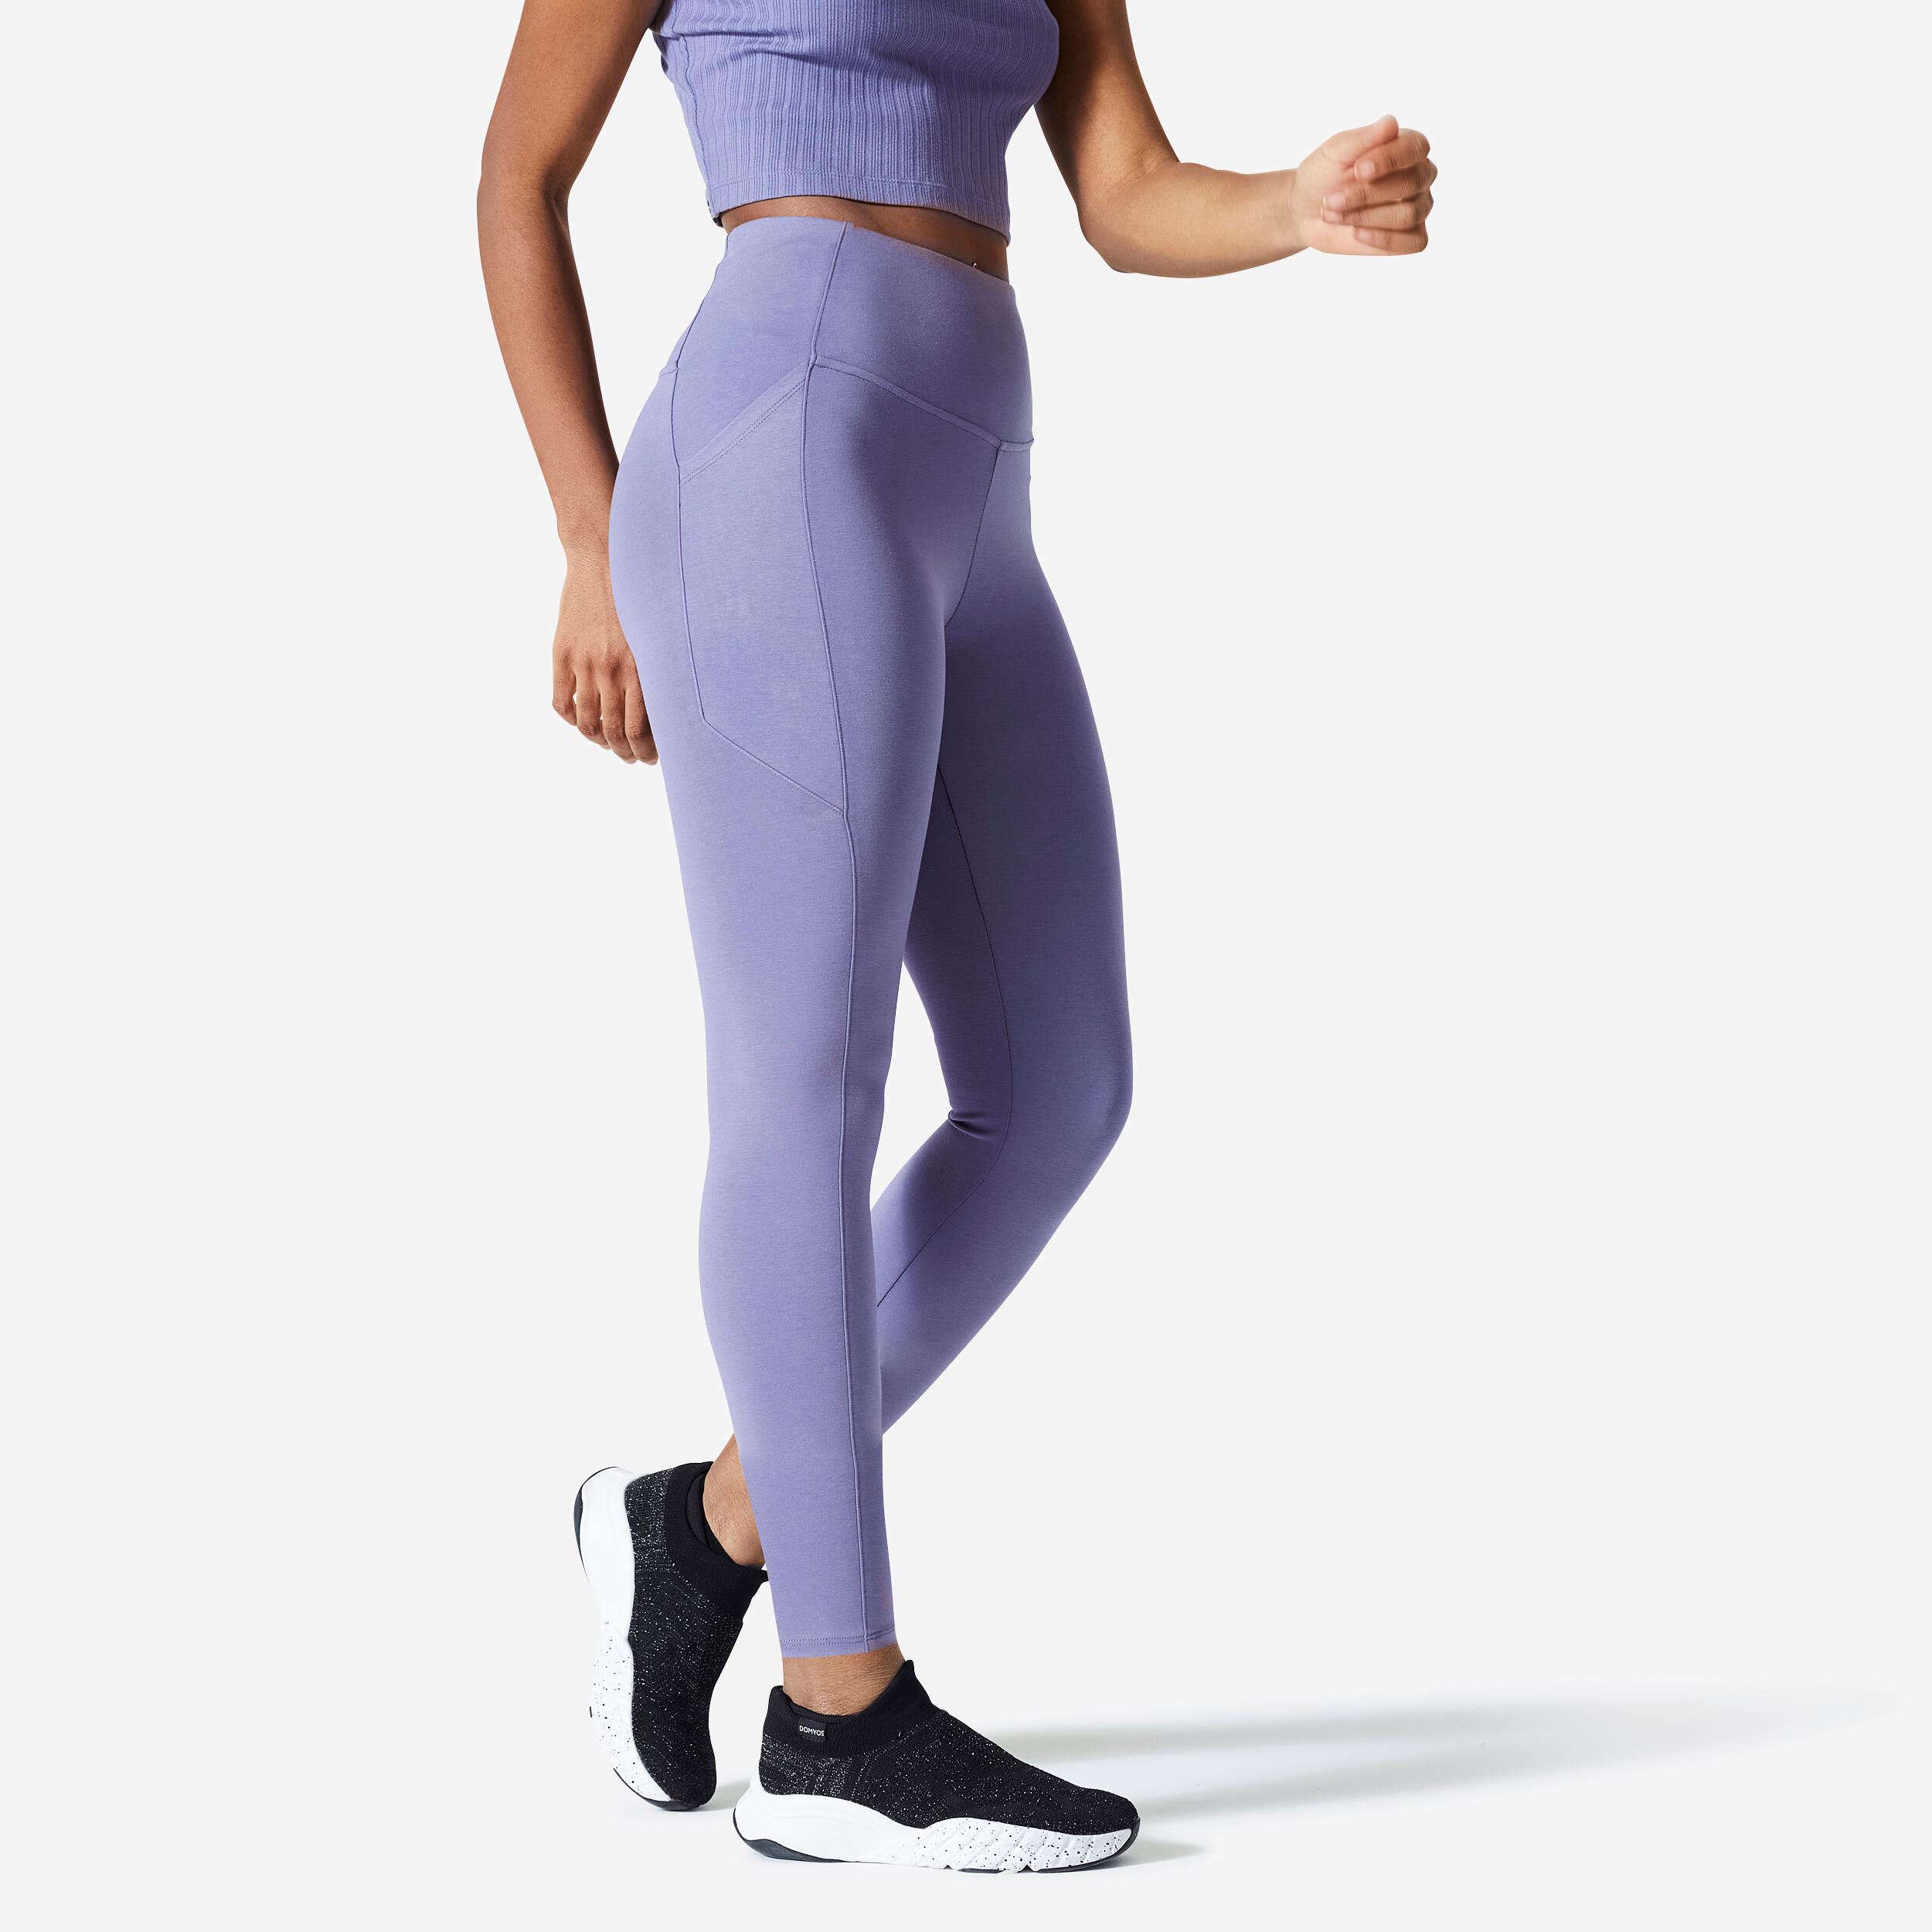 DOMYOS Women's Shaping Fitness Leggings 520 - Neon Purple